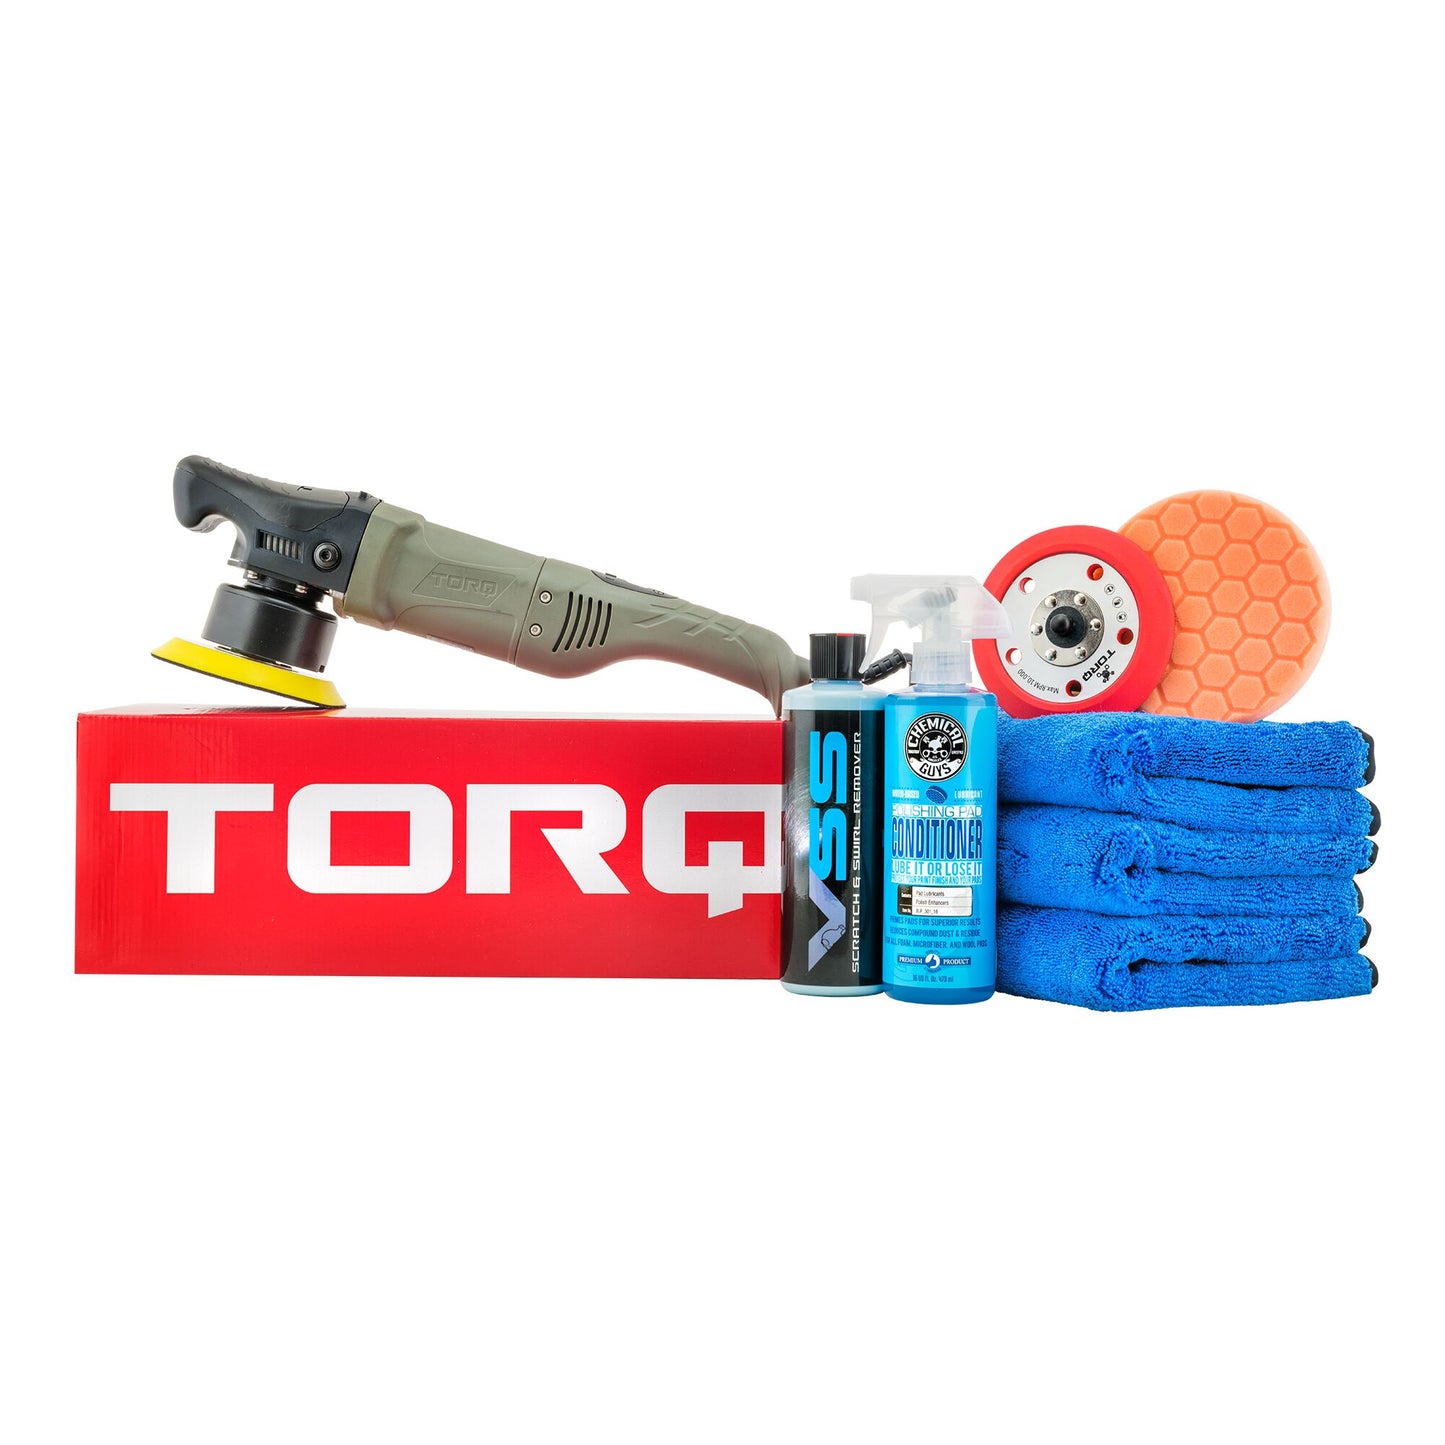 TORQ10FX Random Orbital Polisher Kit One-Step Scratch and Swirl Remover Kit (8 Items)